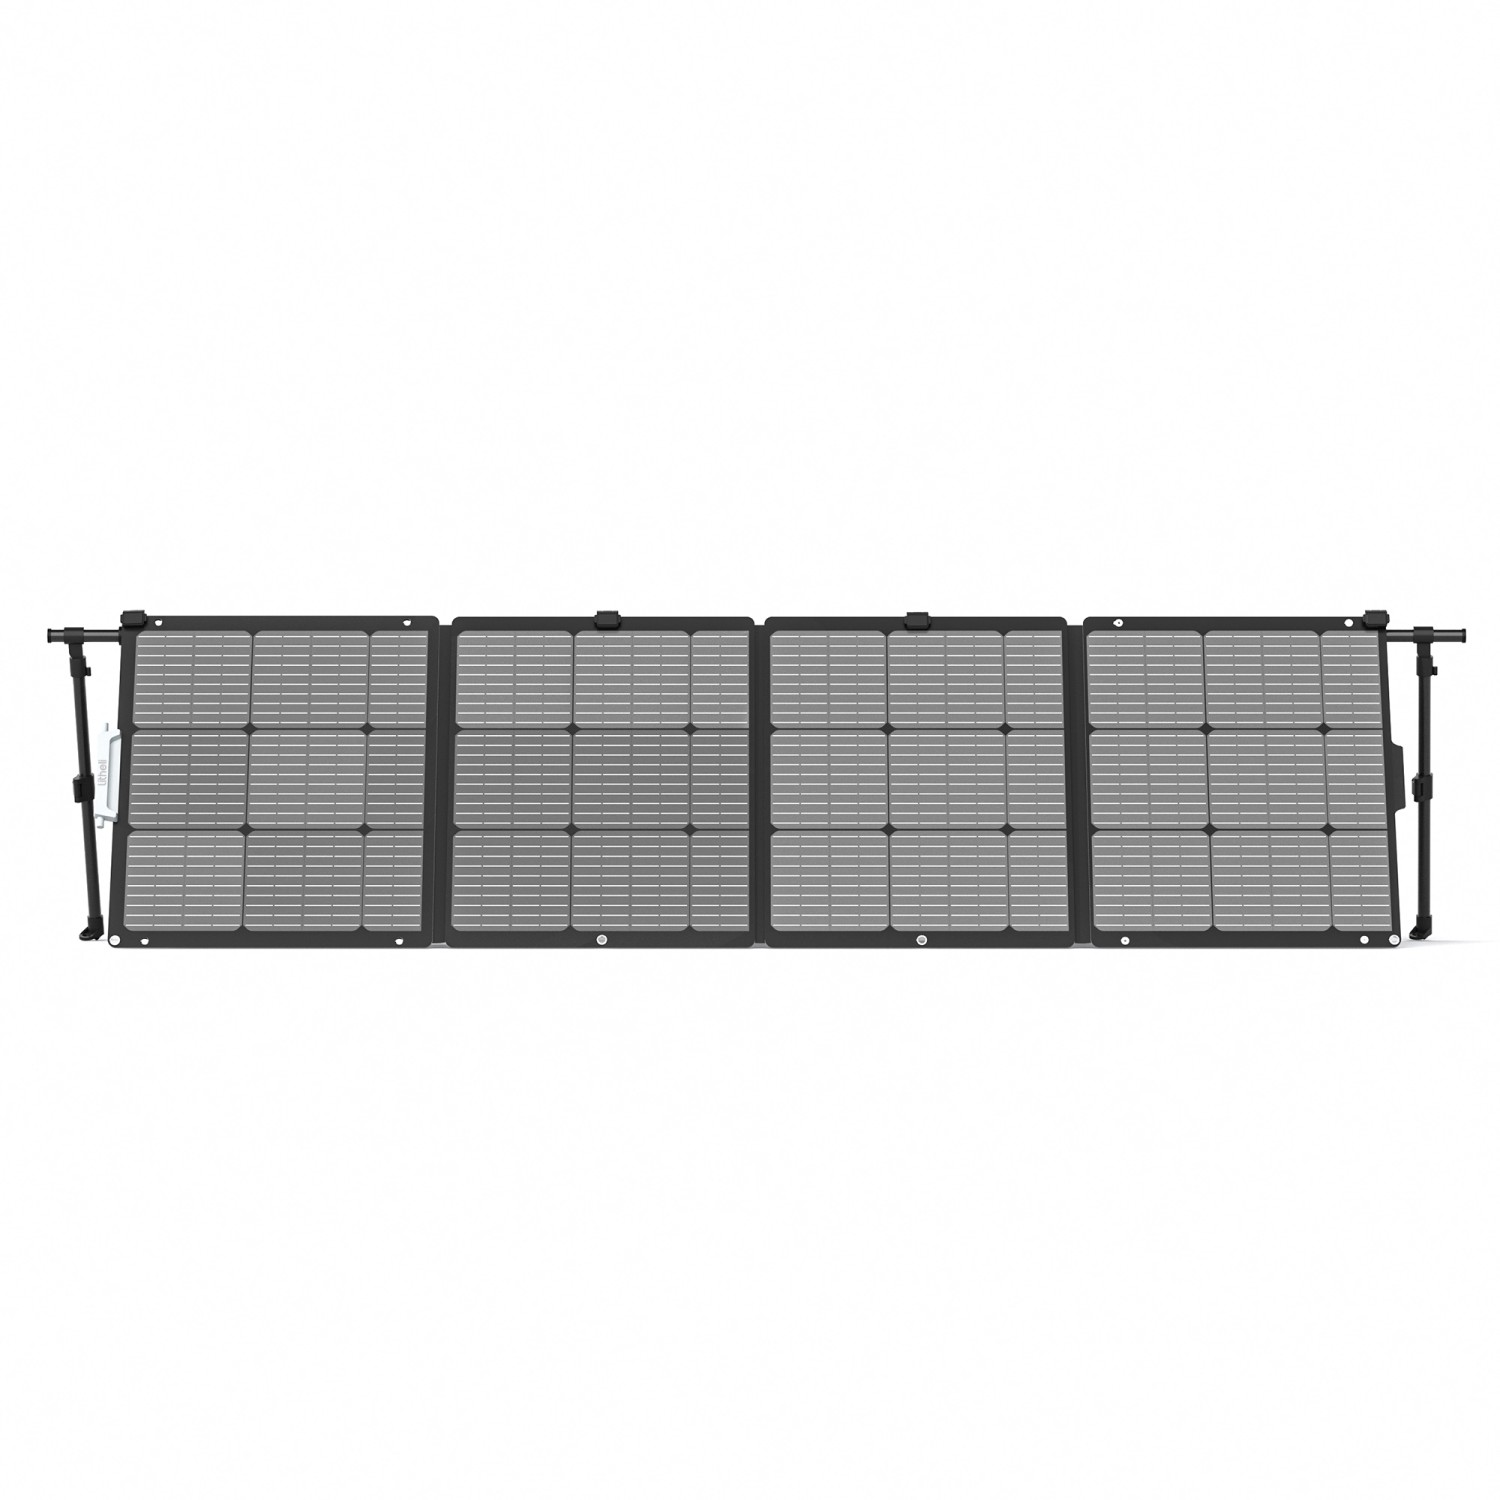 Litheli Solar Panel 200W SSU-200S